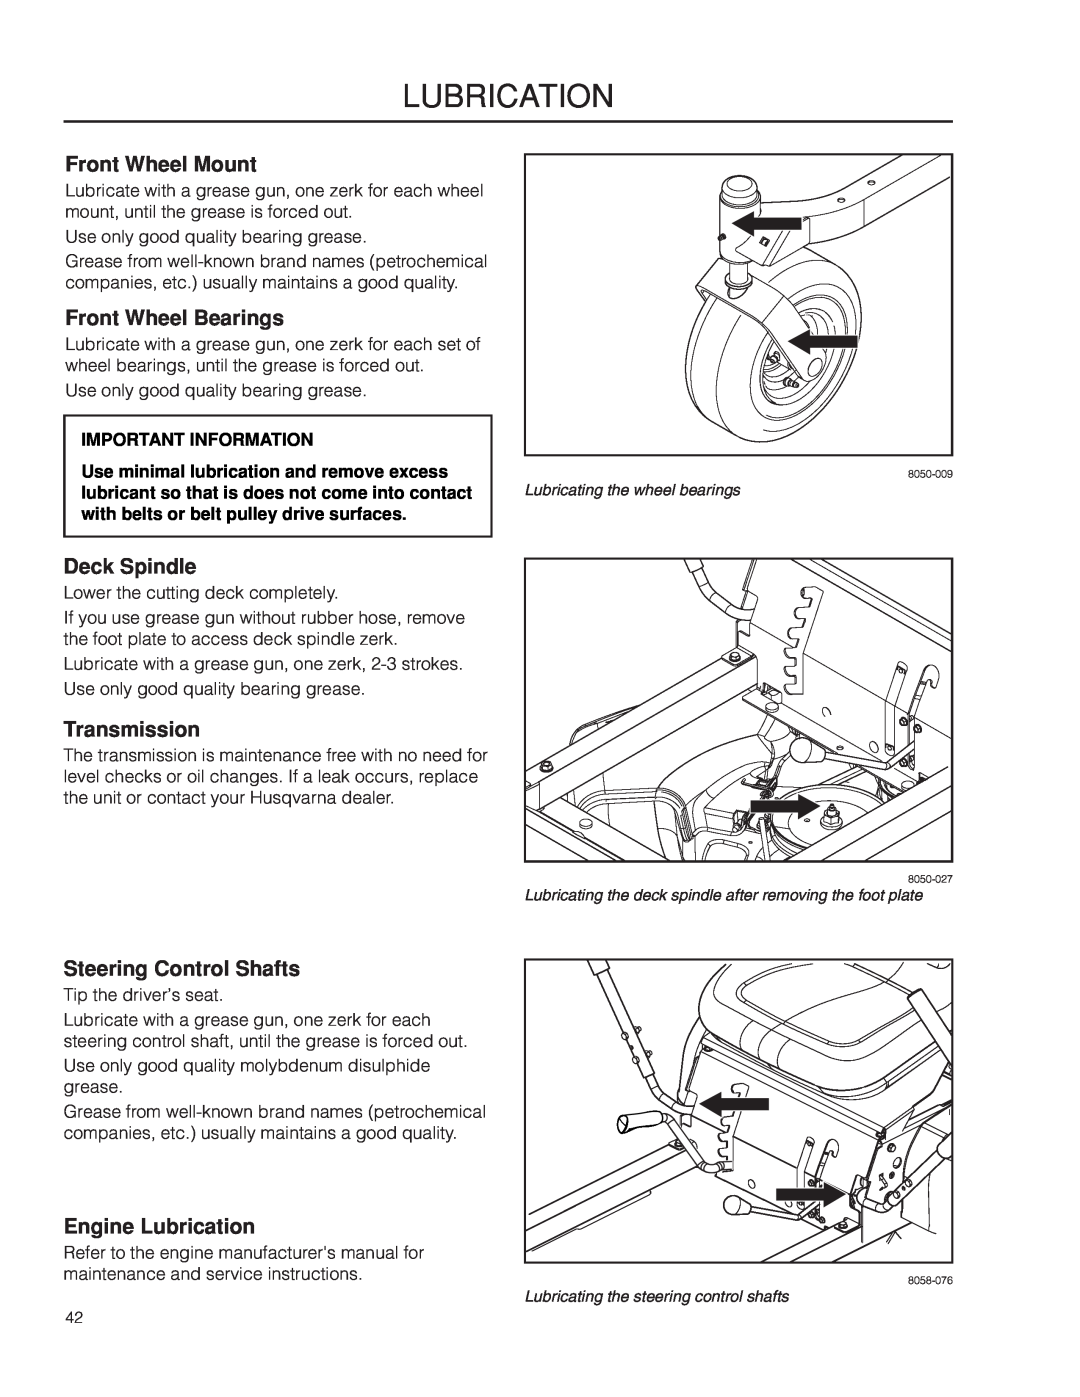 Husqvarna RZ3019 BF/966582101 Front Wheel Mount, Front Wheel Bearings, Deck Spindle, Transmission, Steering Control Shafts 